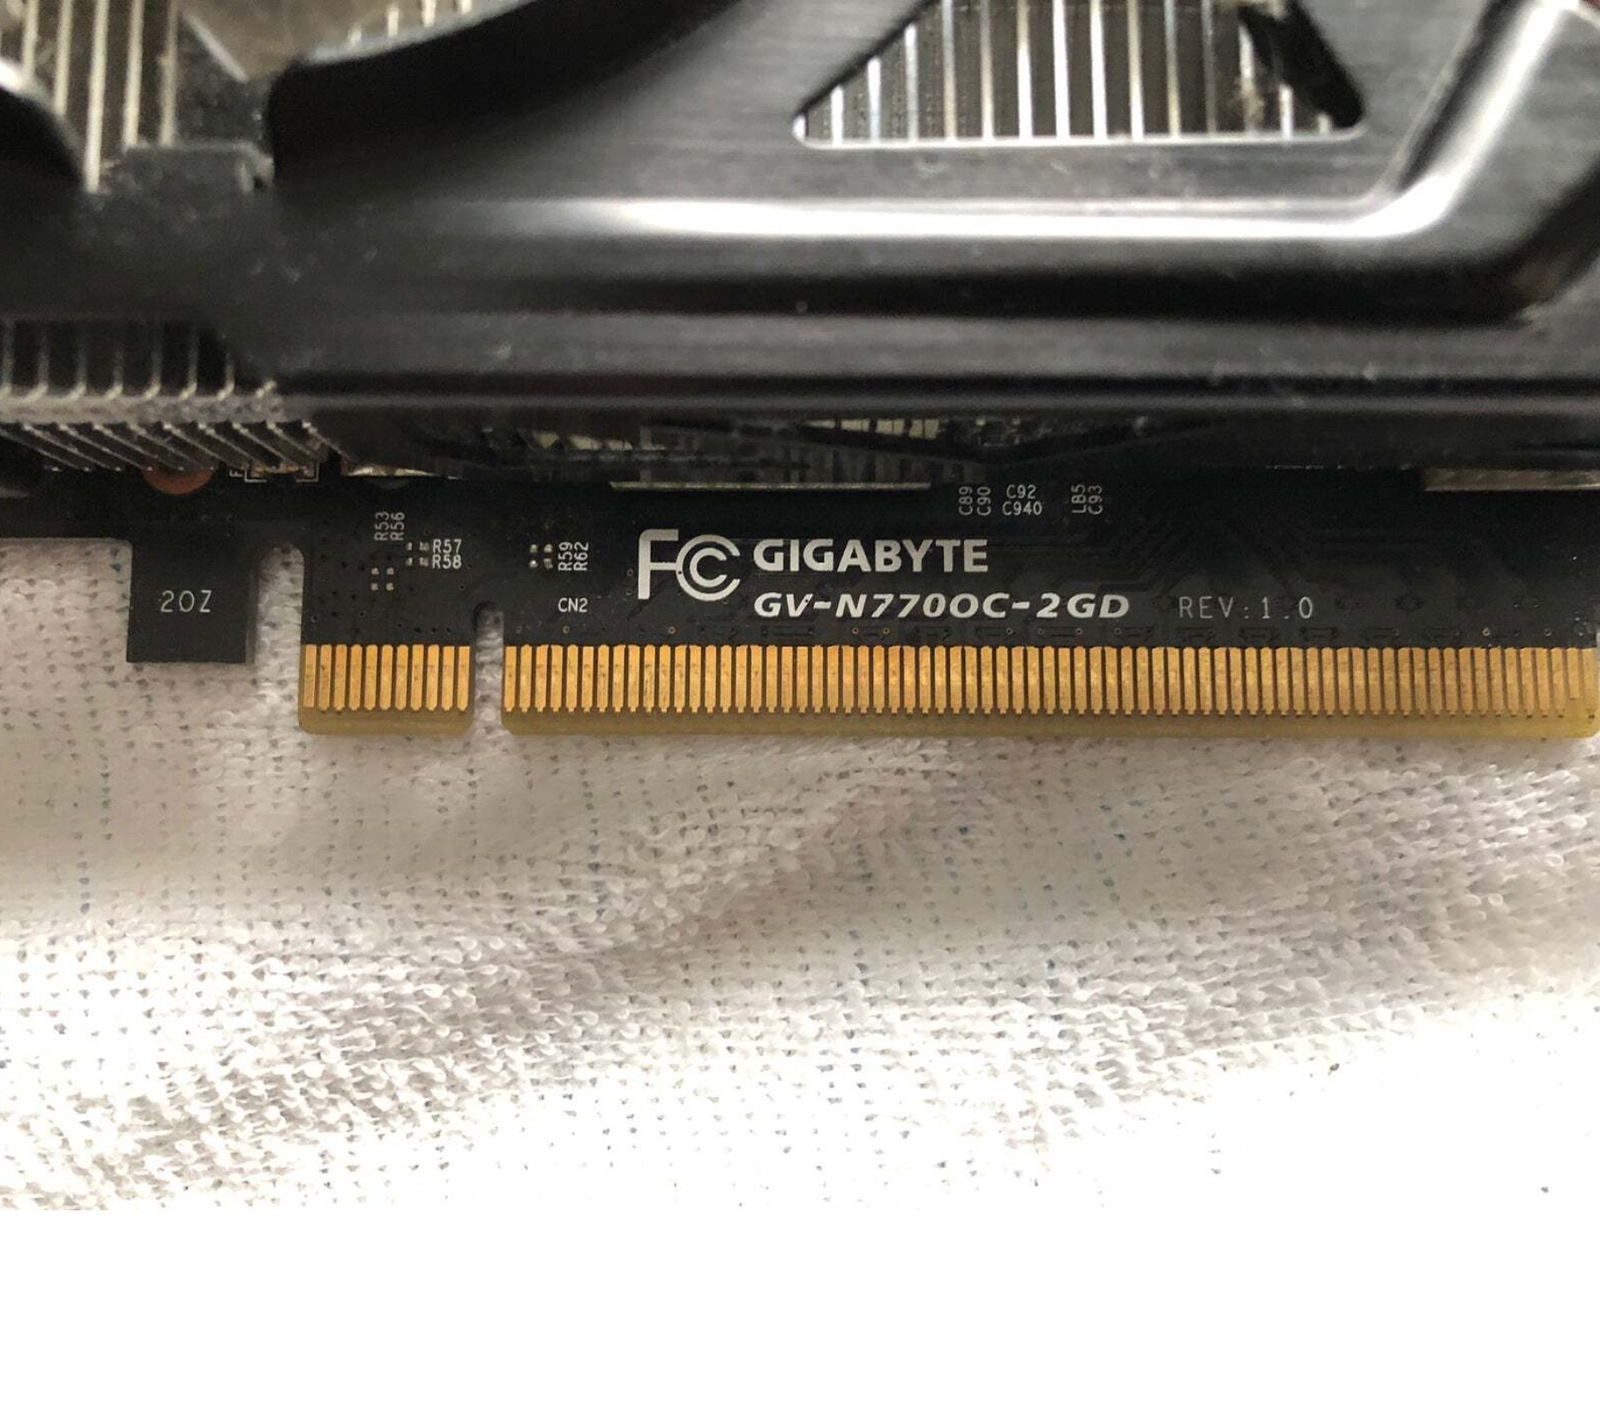 Geforce Gigabyte, 2 GB RAM, God